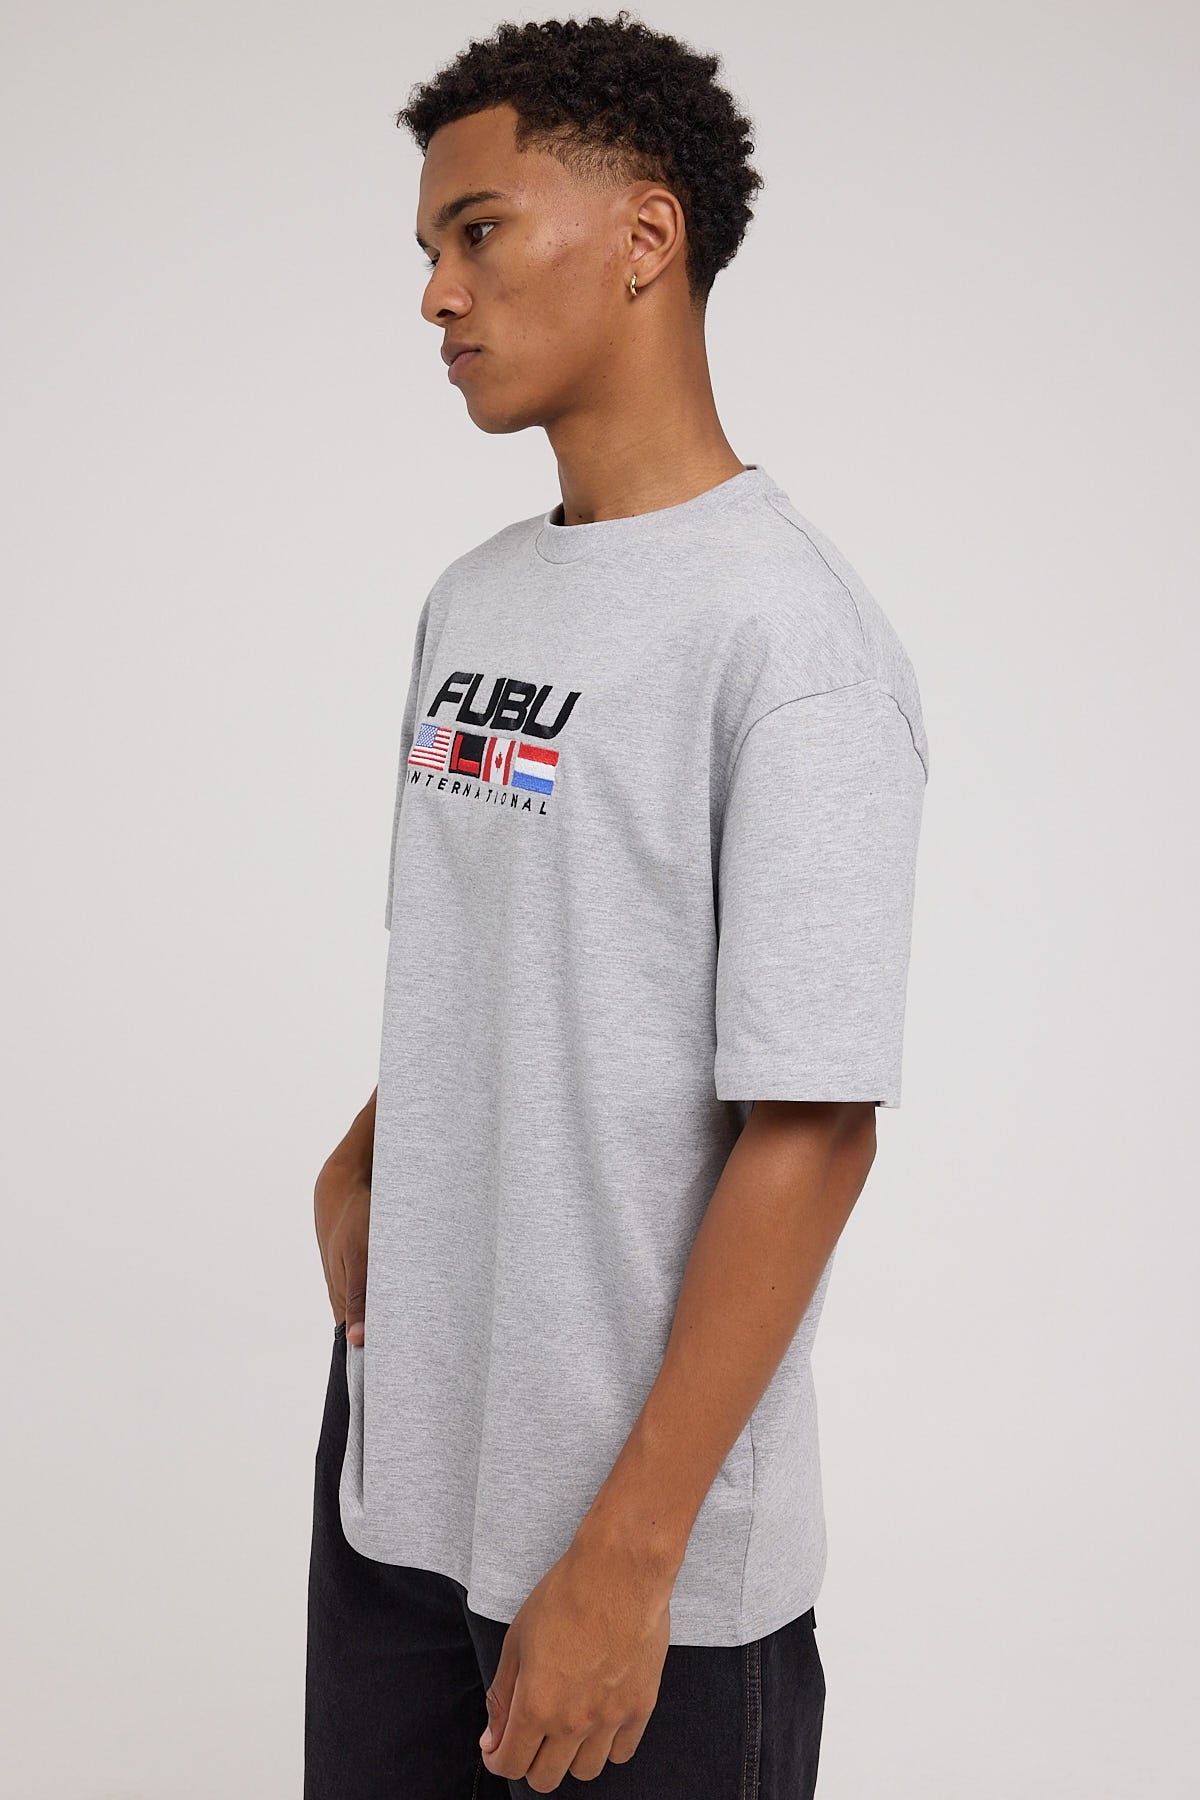 Fubu Corporate Intnl T-Shirt Grey